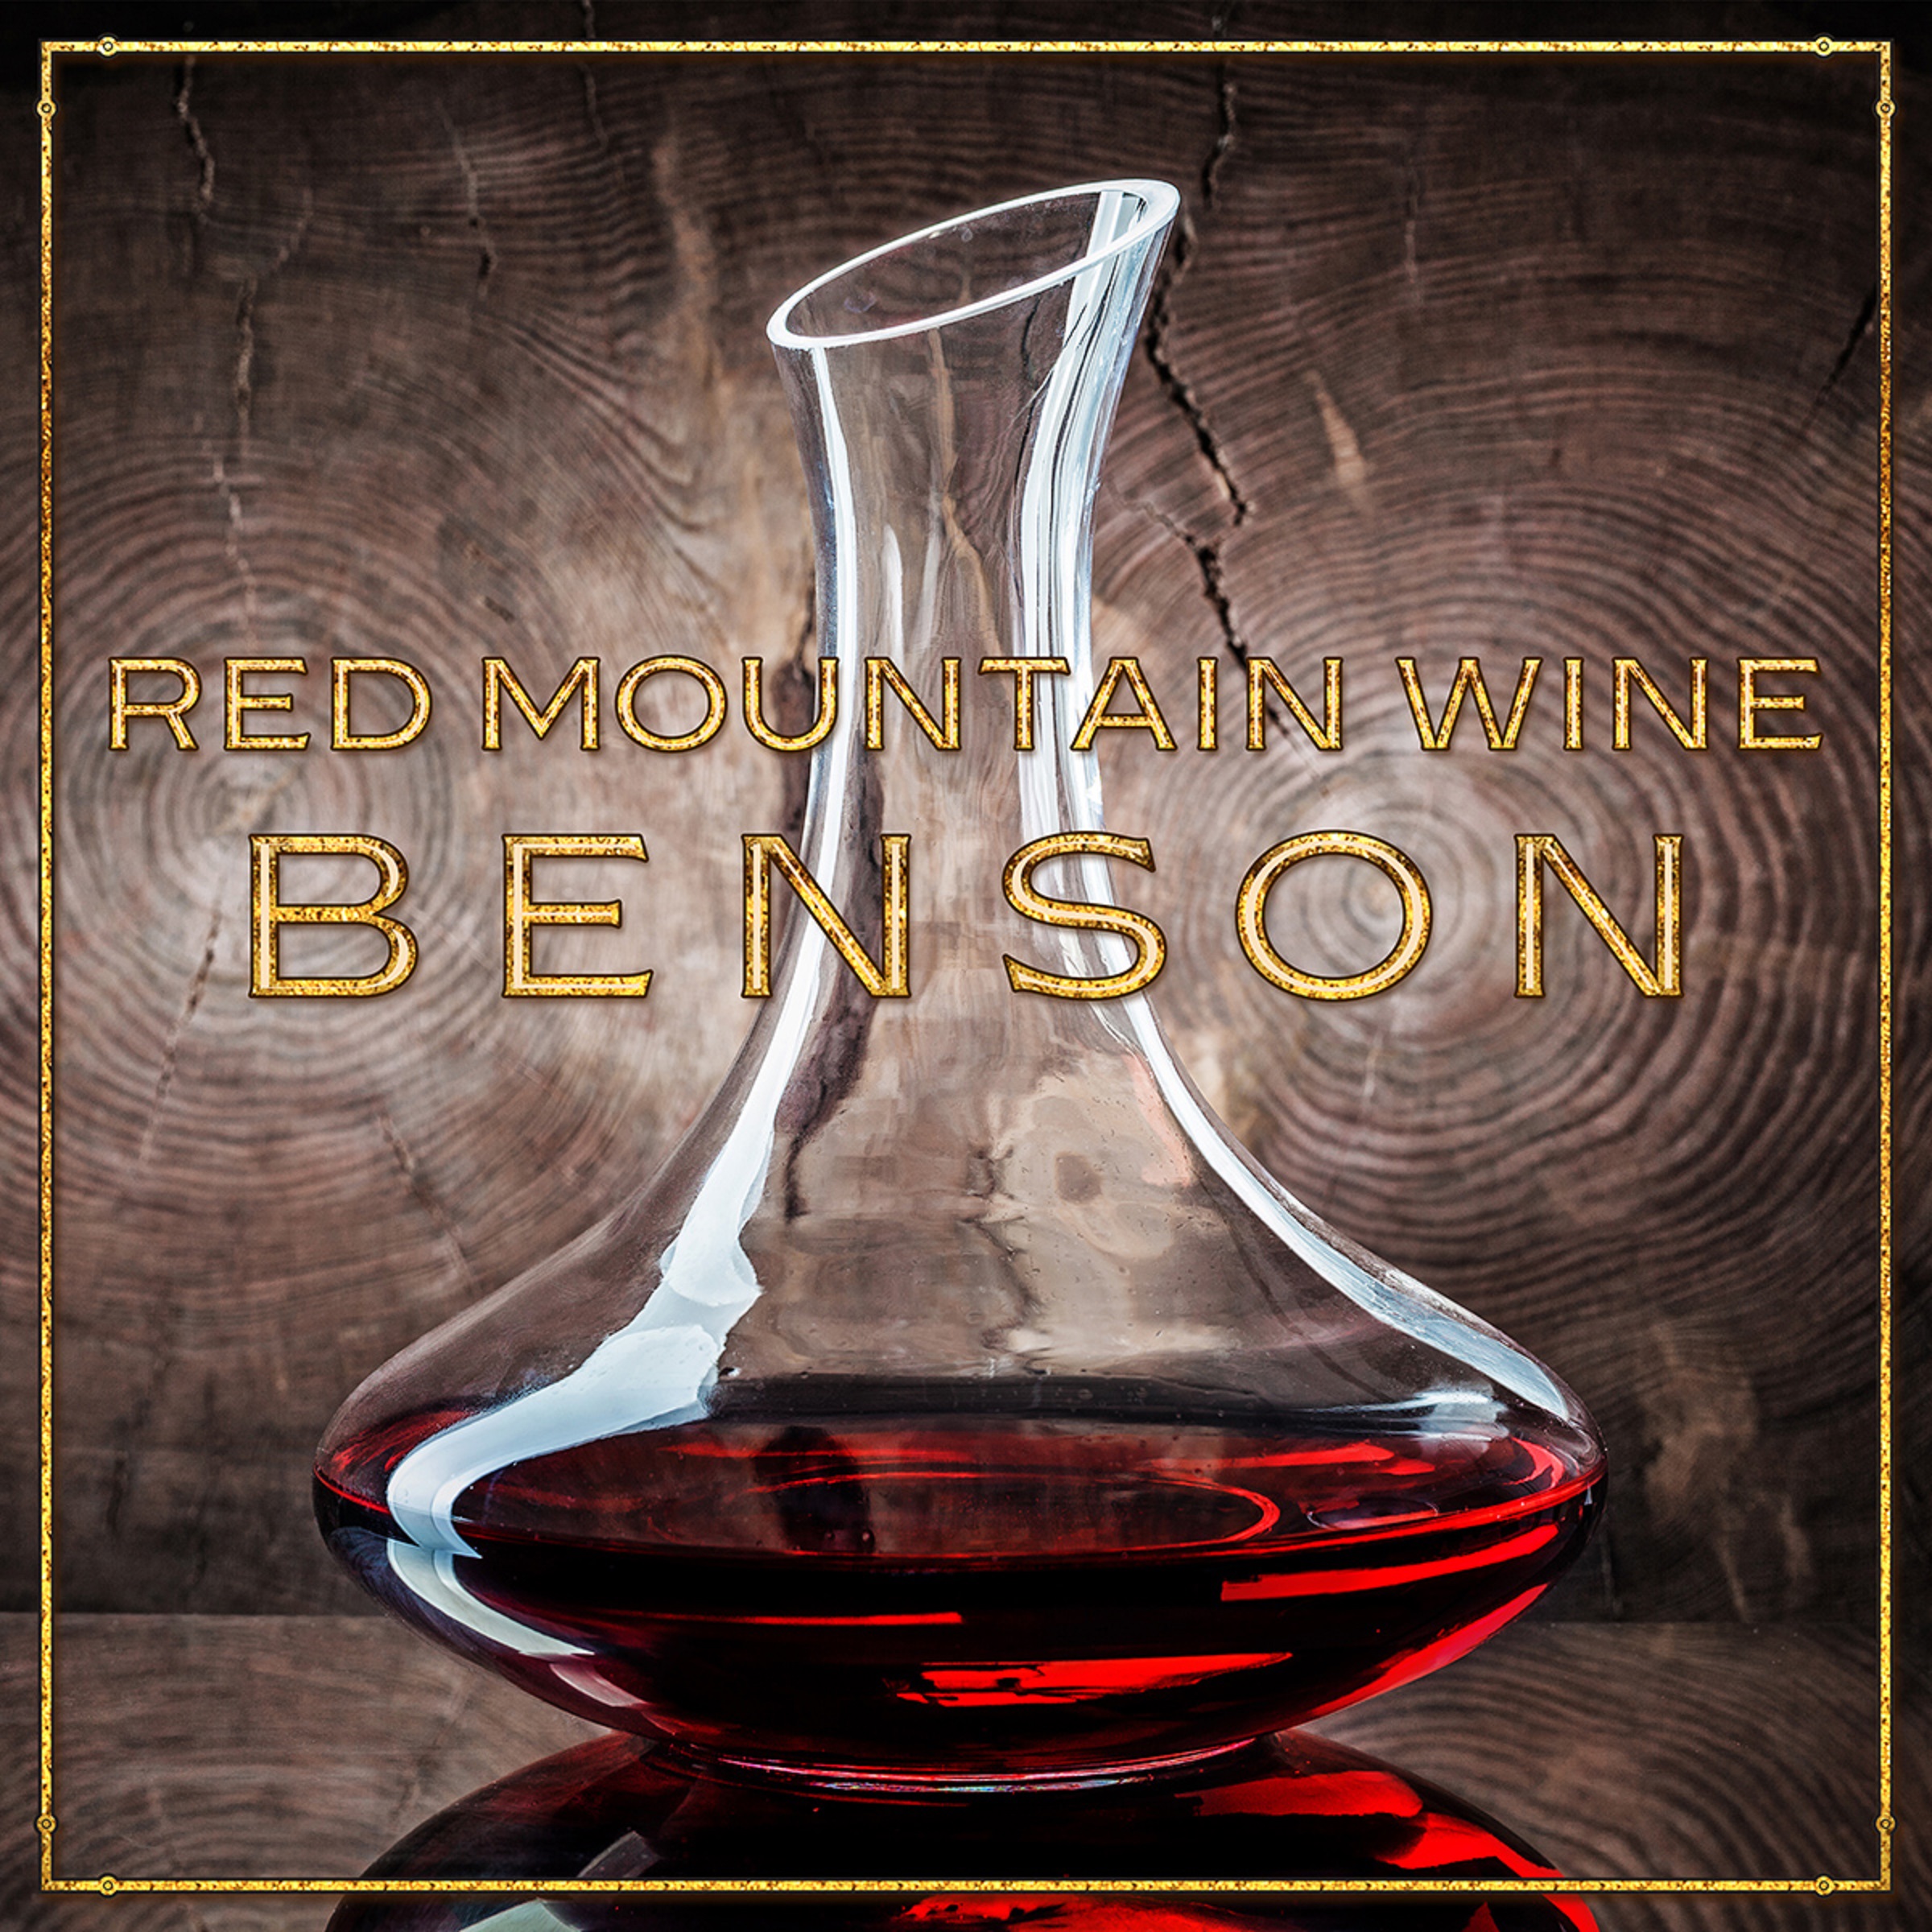 Benson’s “Red Mountain Wine” is a bluegrass barnburner